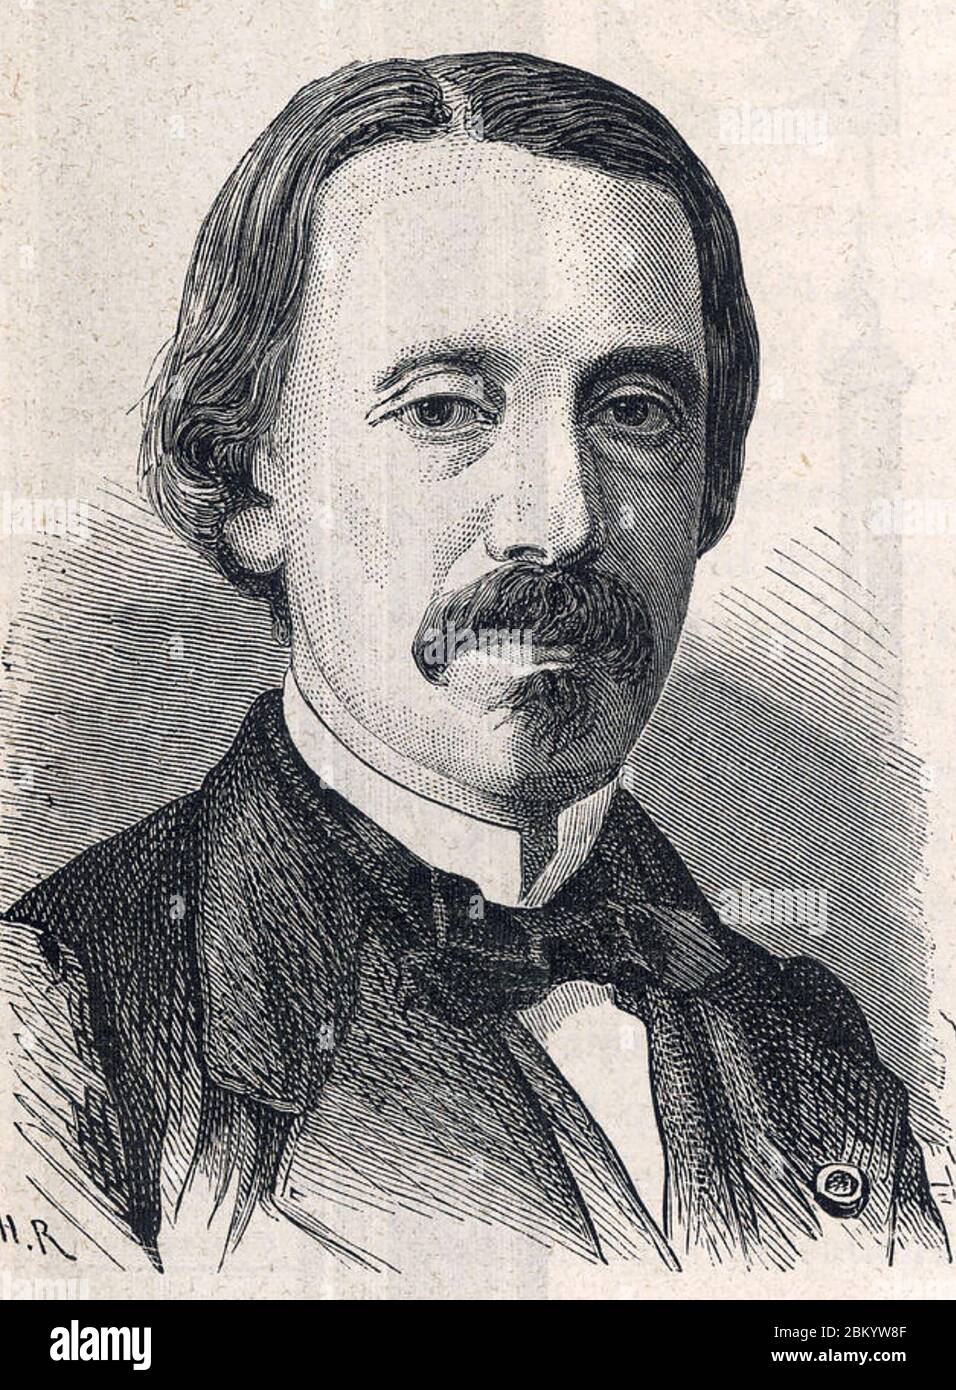 LÉON FOUCAULT (1819-1868) físico francés que demostró la rotación de la tierra Foto de stock